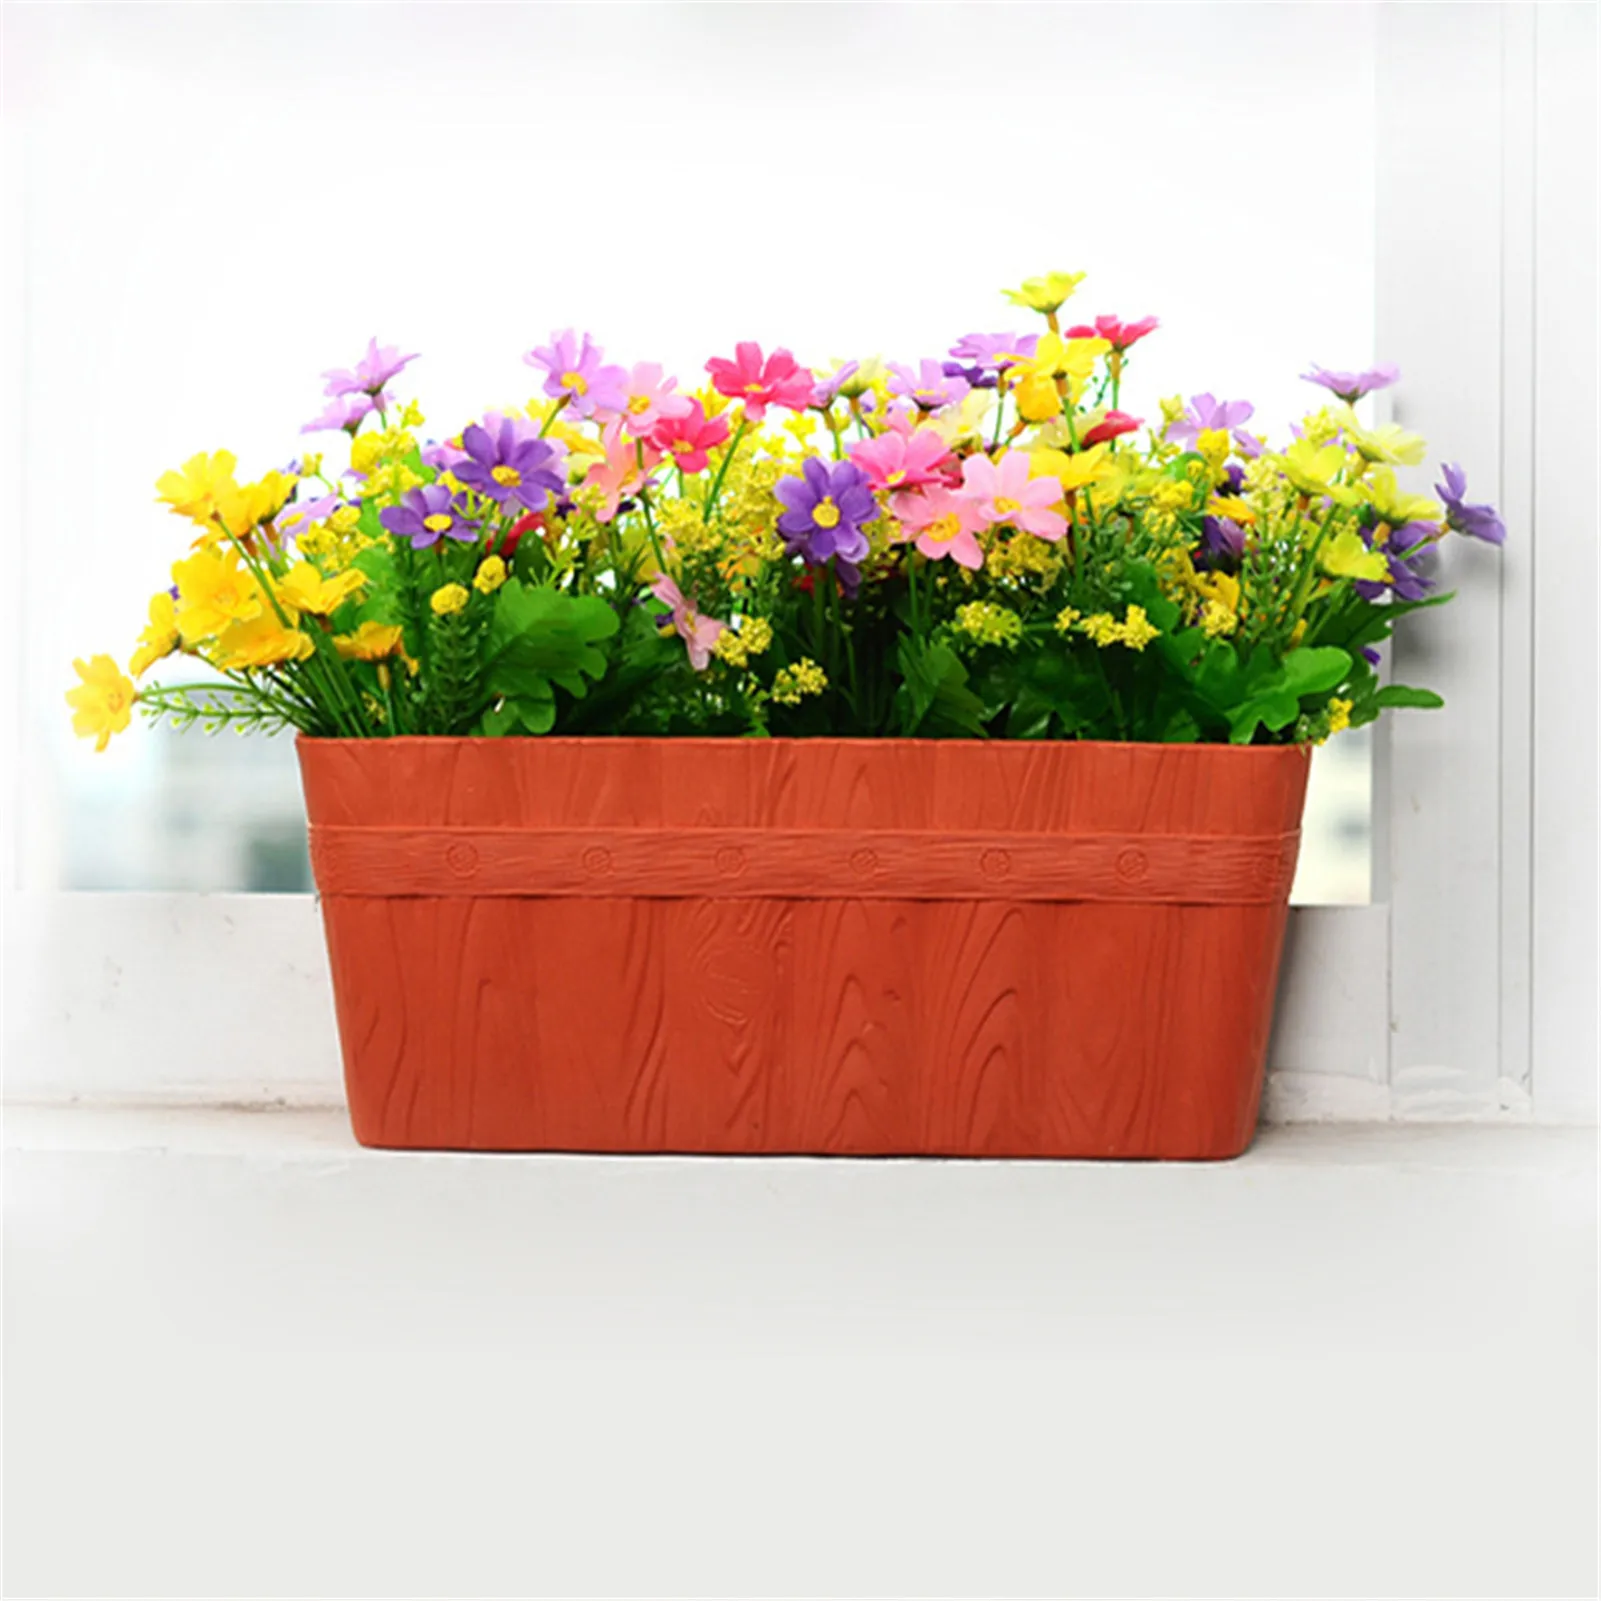 

Plastic Rectangle Plant Flower Pot Succulent Planter Vegetable Growing Container Flower Vase For Home Tabletop Balcony Decor